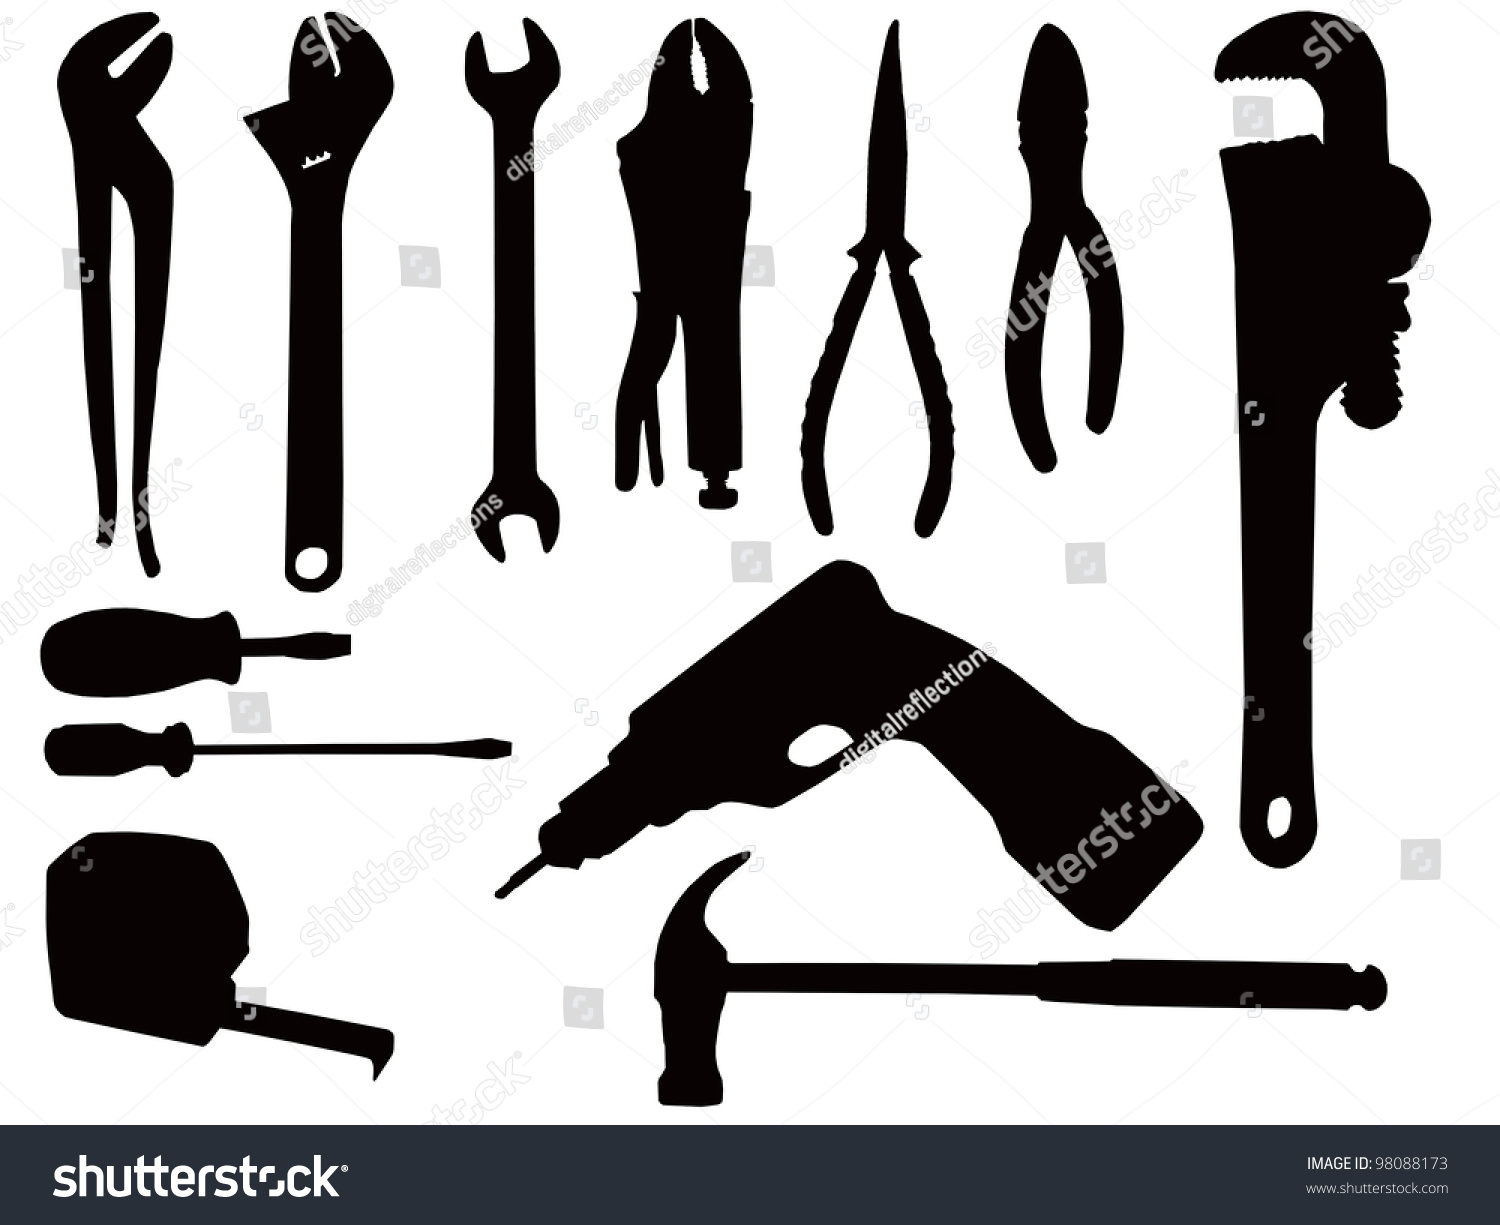 clipart of handyman tools - photo #42